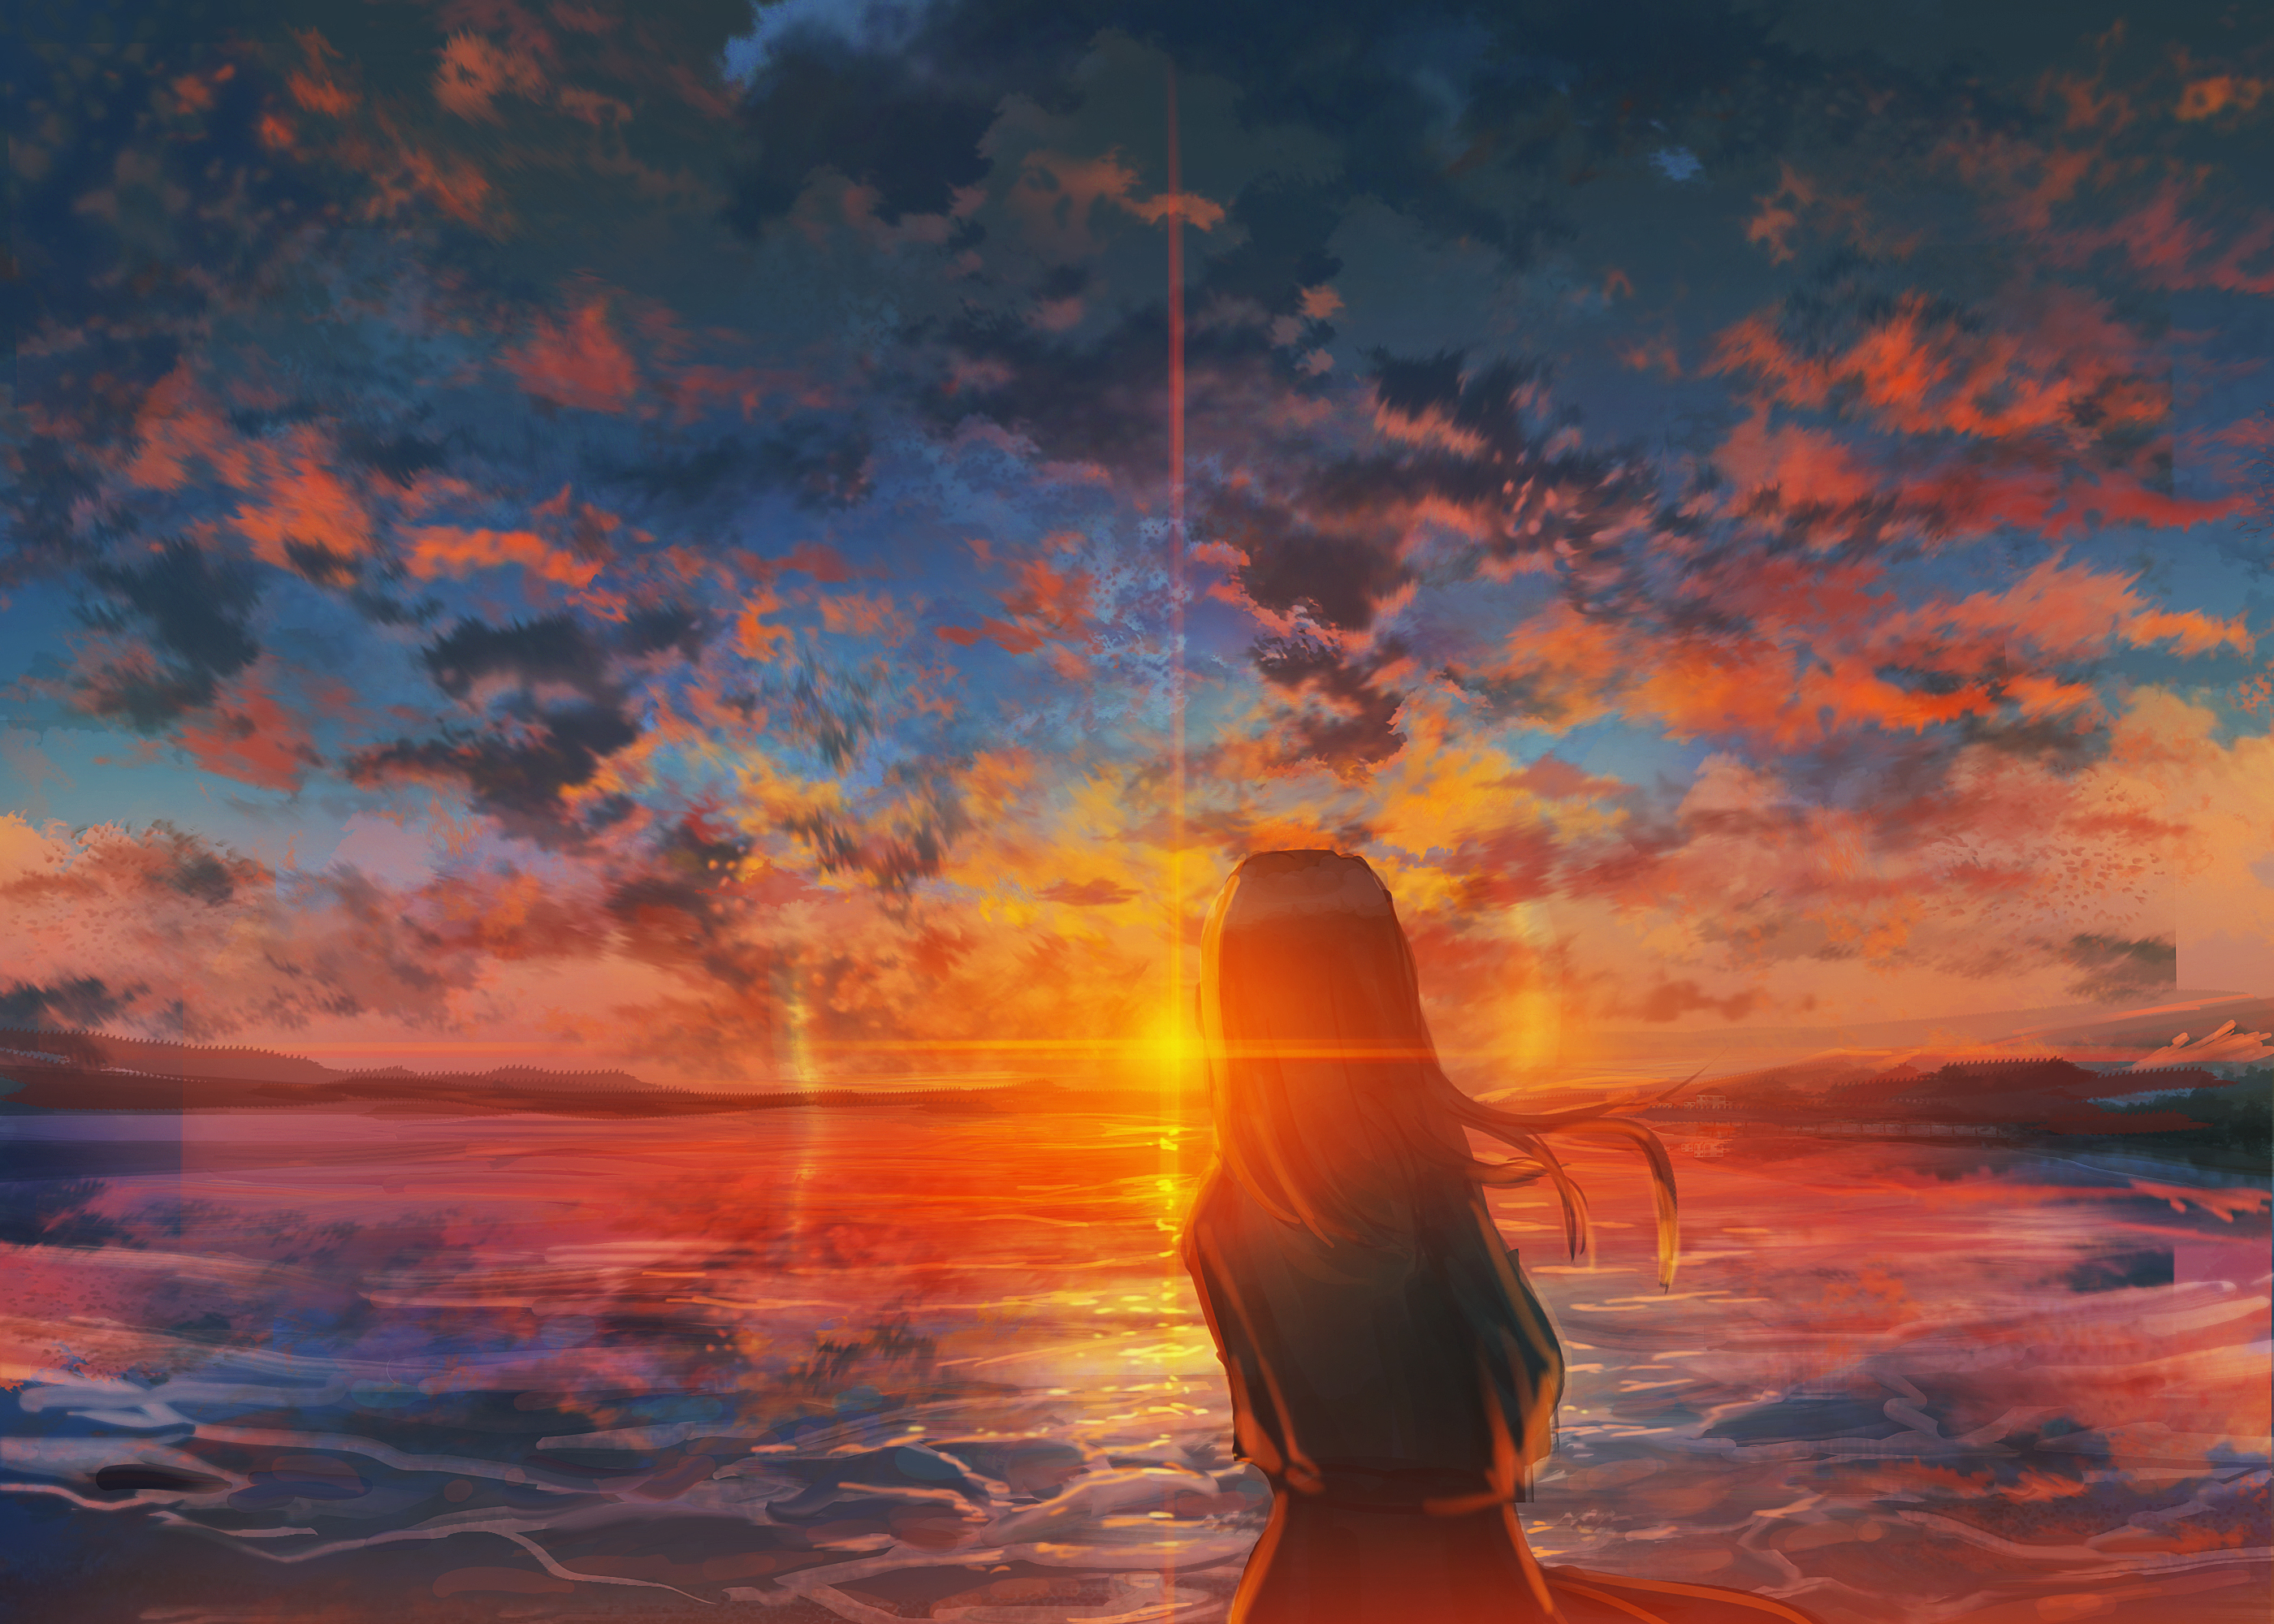 Anime Girl & Boy on Train while sunset Live Wallpaper - Live Wallpaper